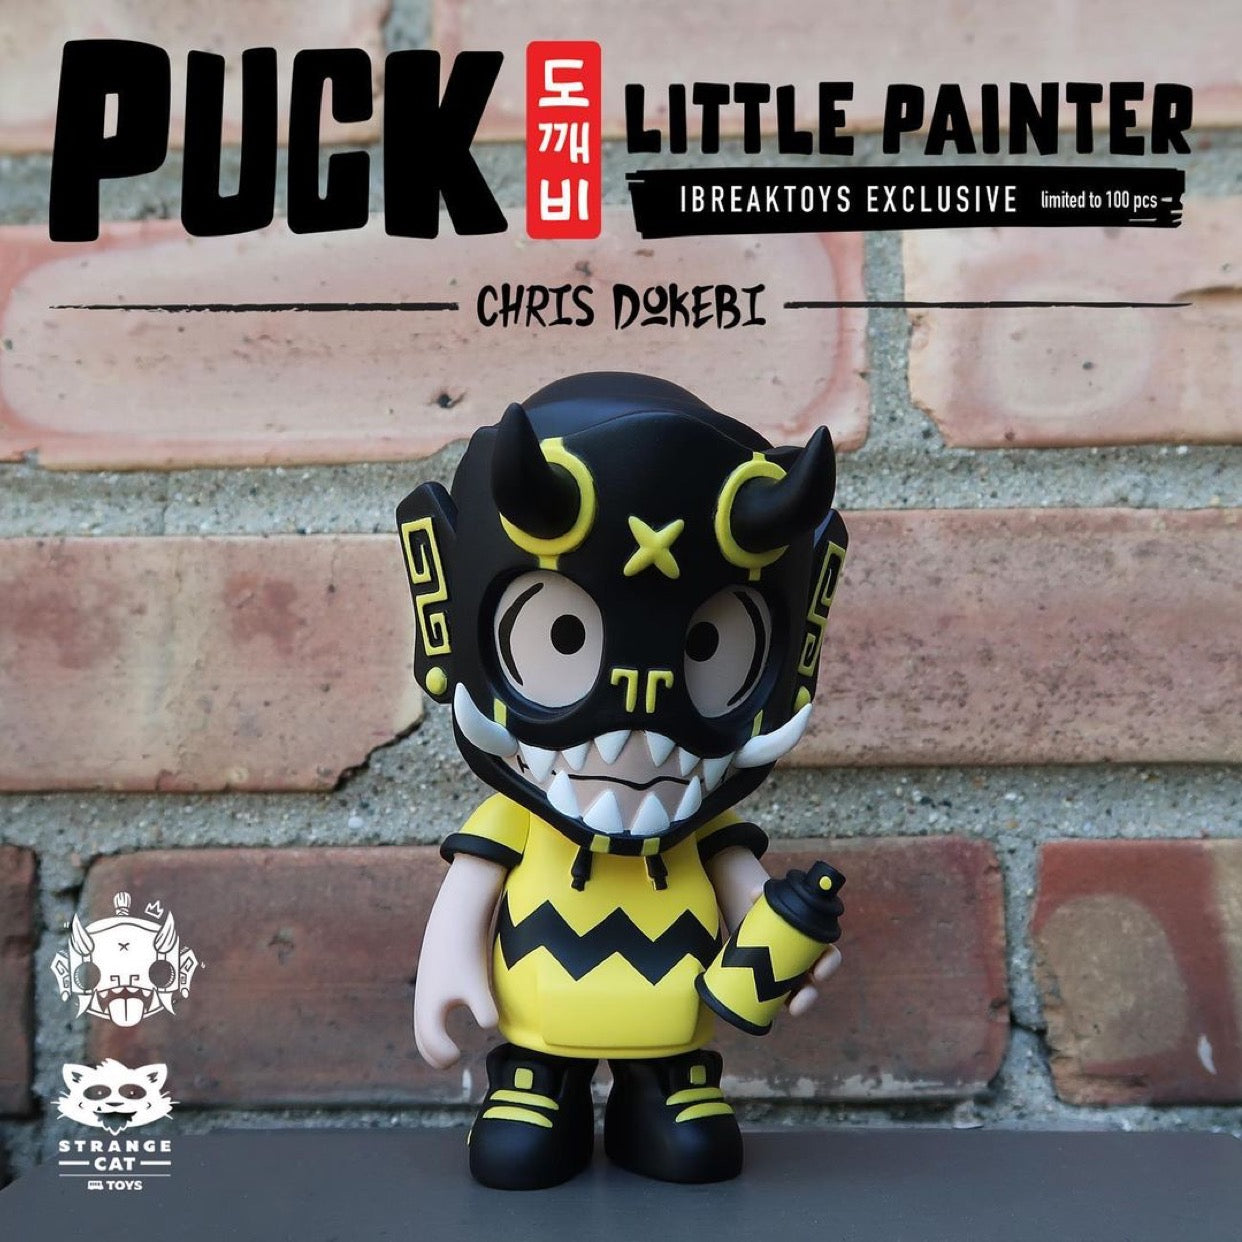 Puck - Little Painter “Chuck” edition by iBreakToys & Chris Dokebi